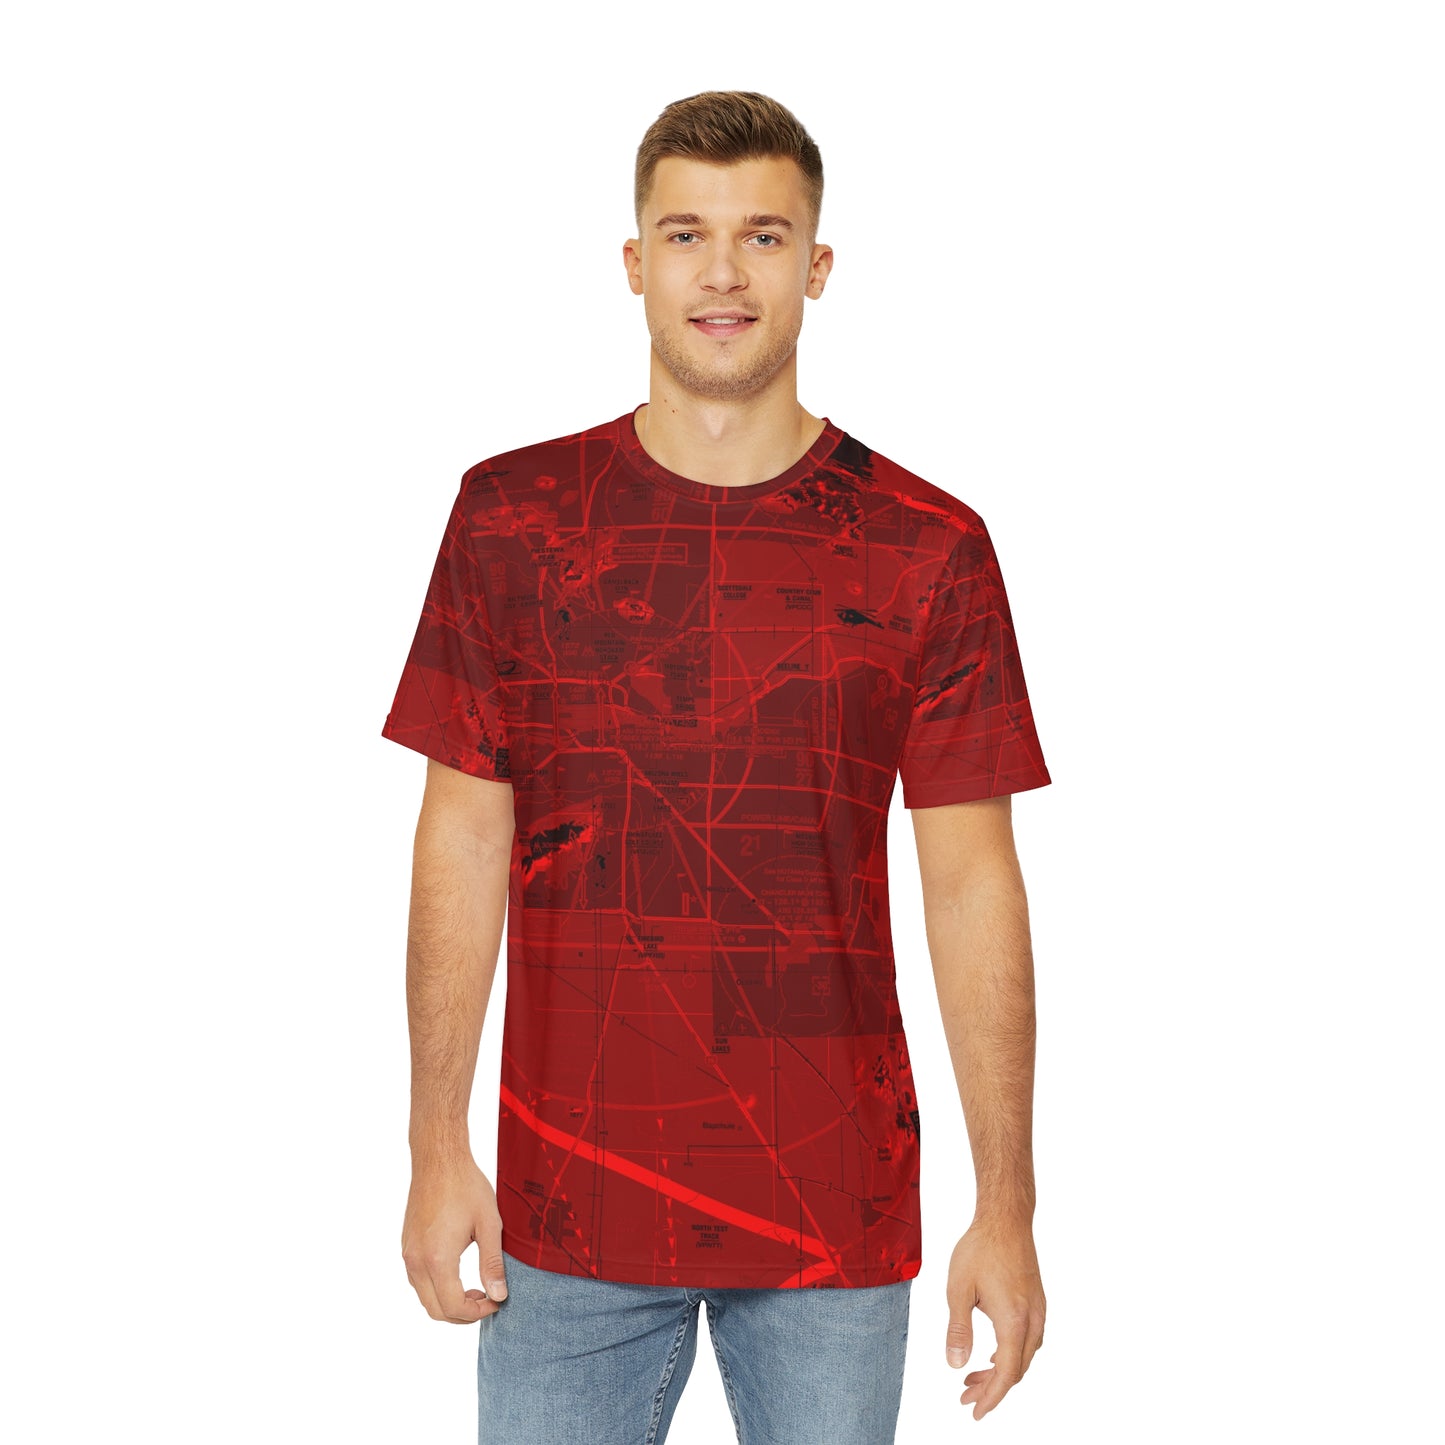 Phoenix TAC Chart (red) men's polyester shirt